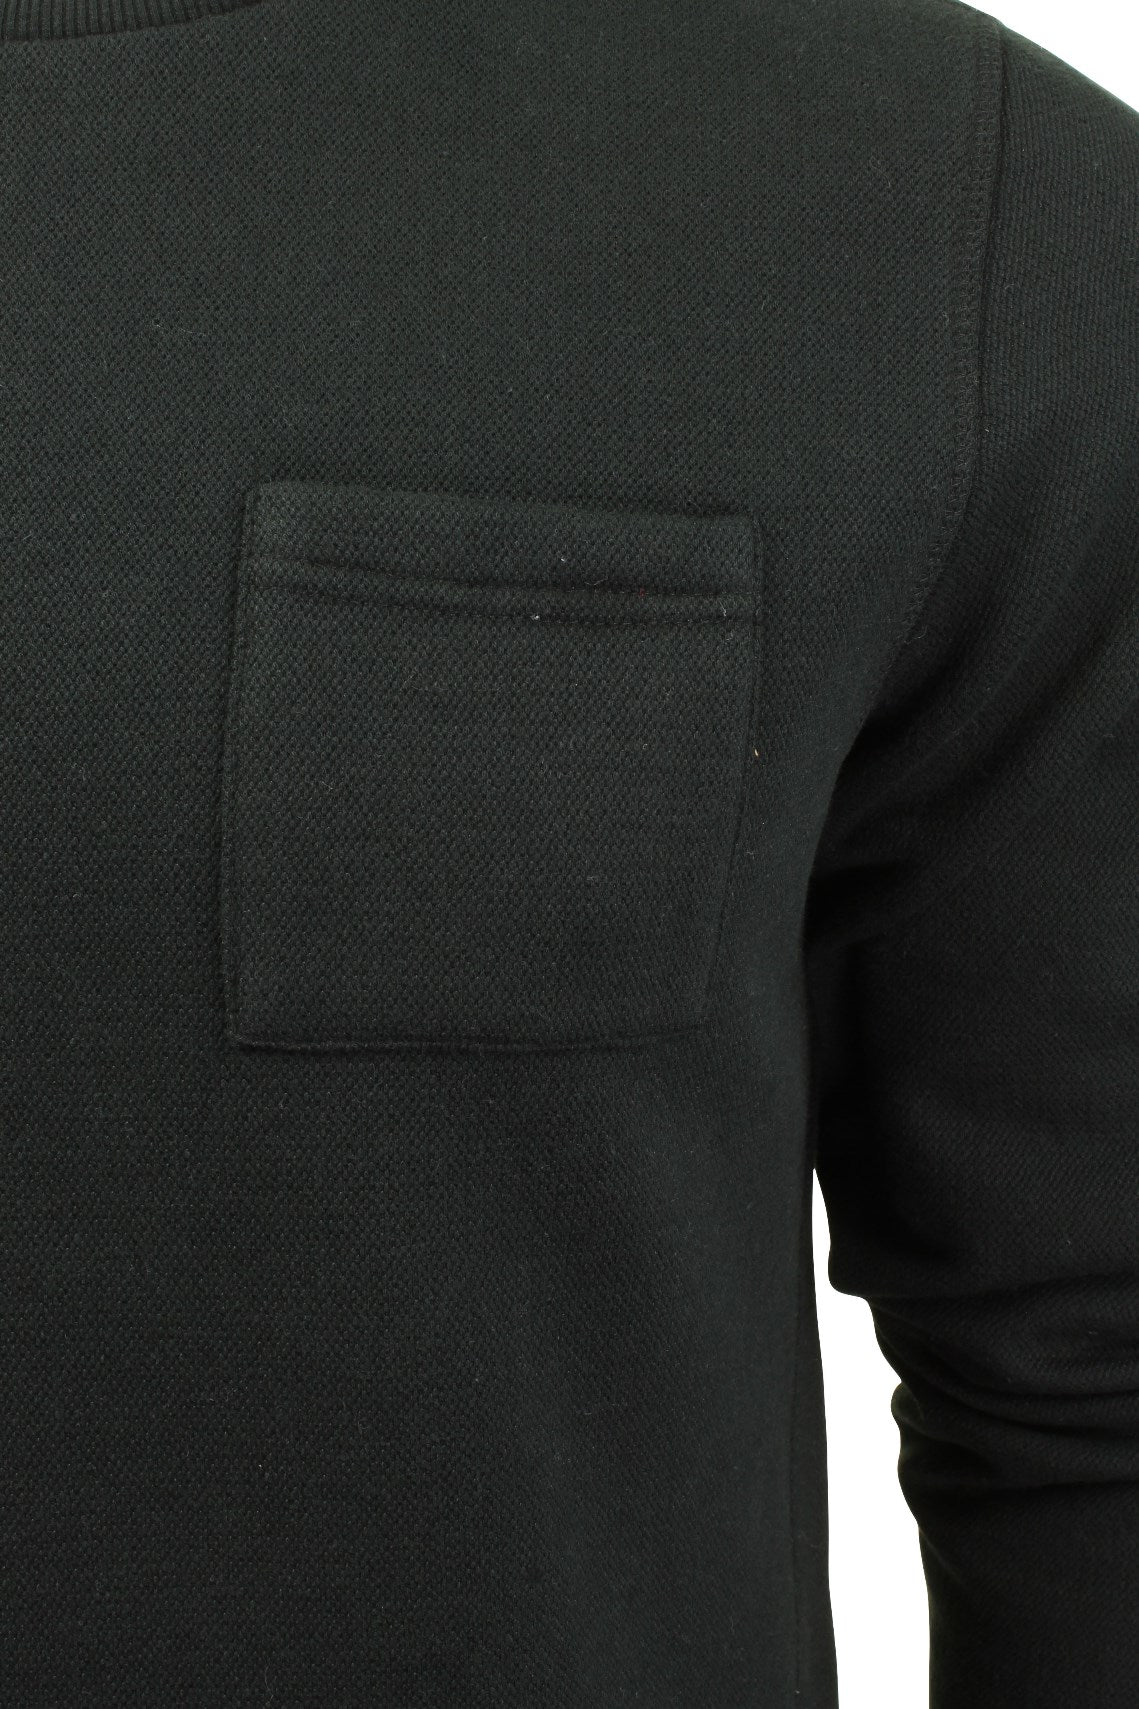 Mens Jumper Cotton Mix Fashion Sweater Jumper by Dissident (Black, L), 02, 1D8189, Black